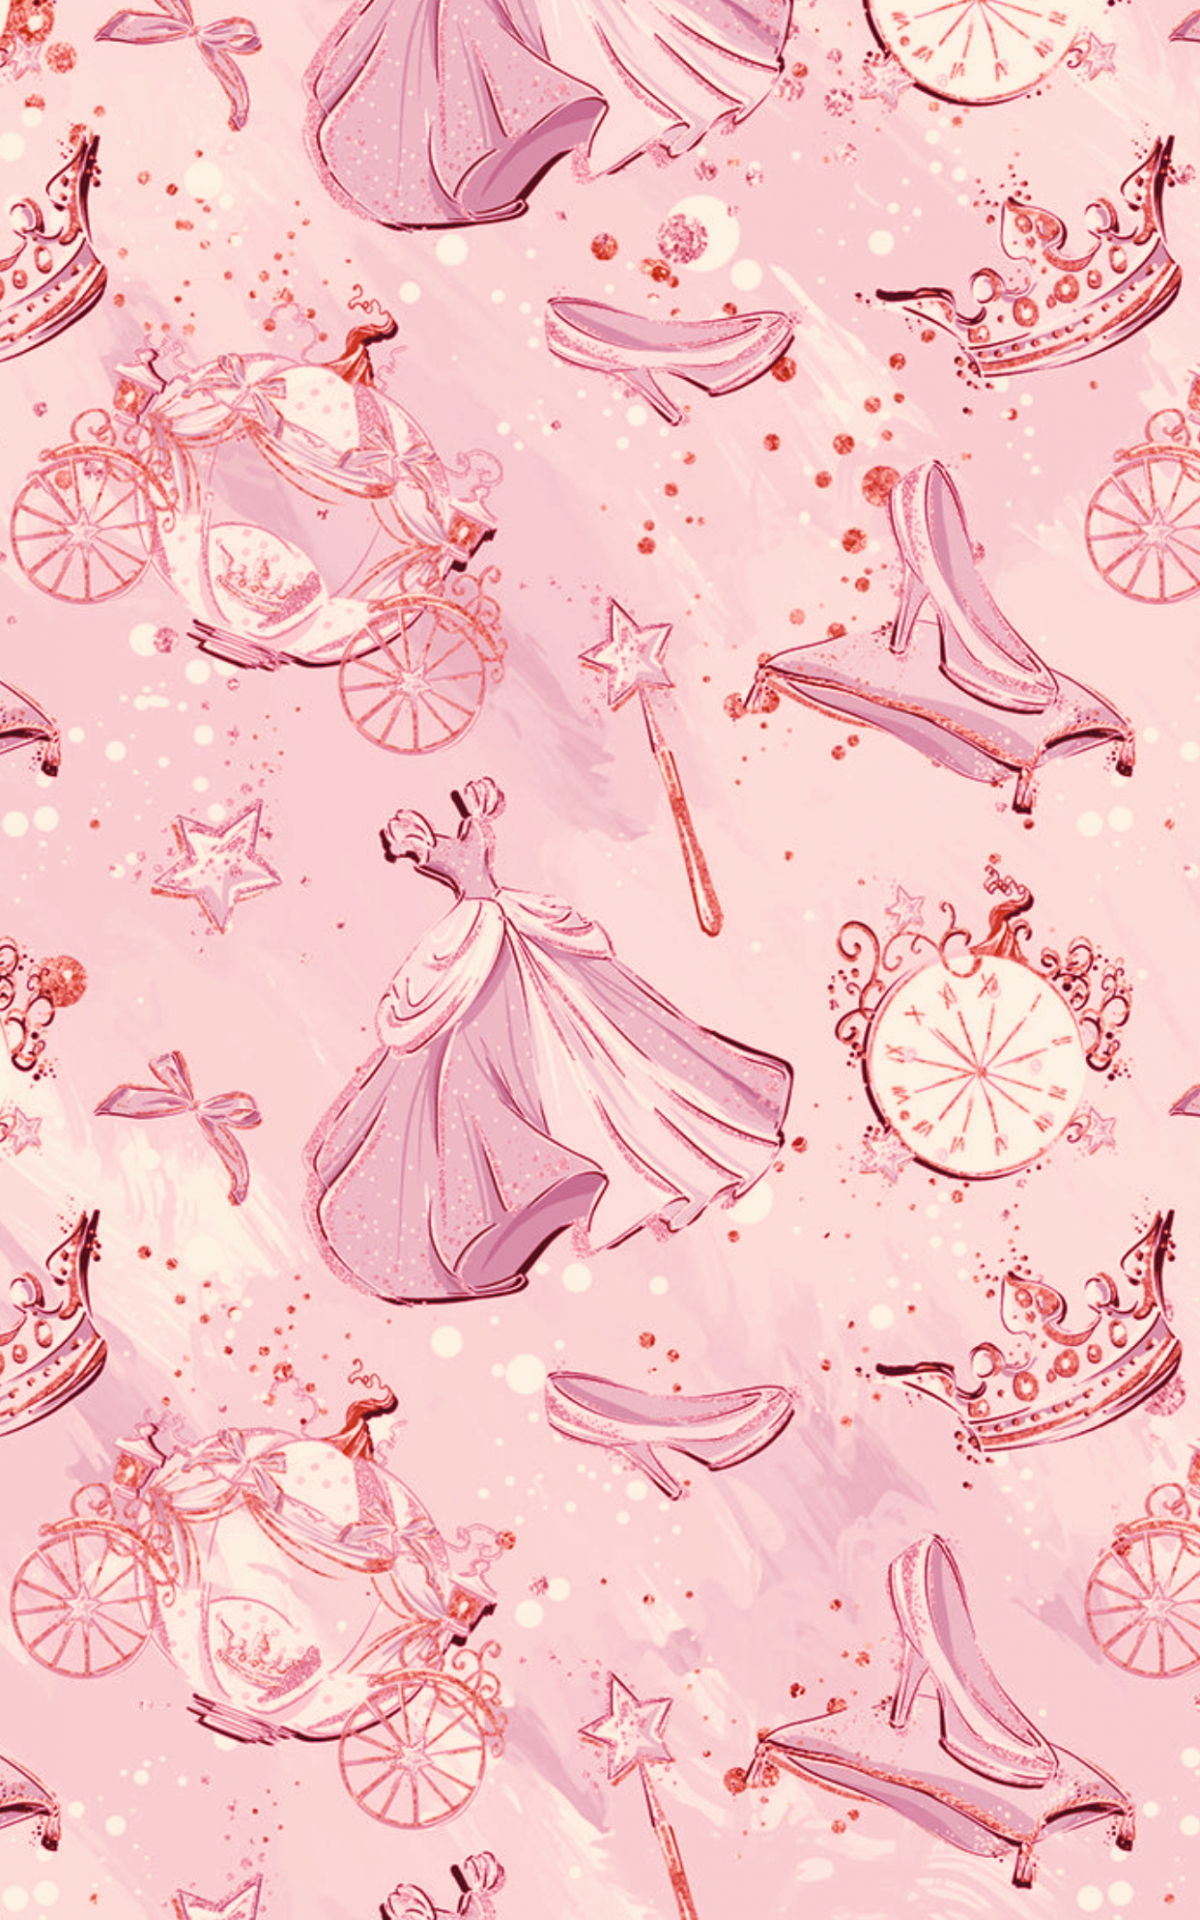 Pink Cinderella iPhone Wallpaper